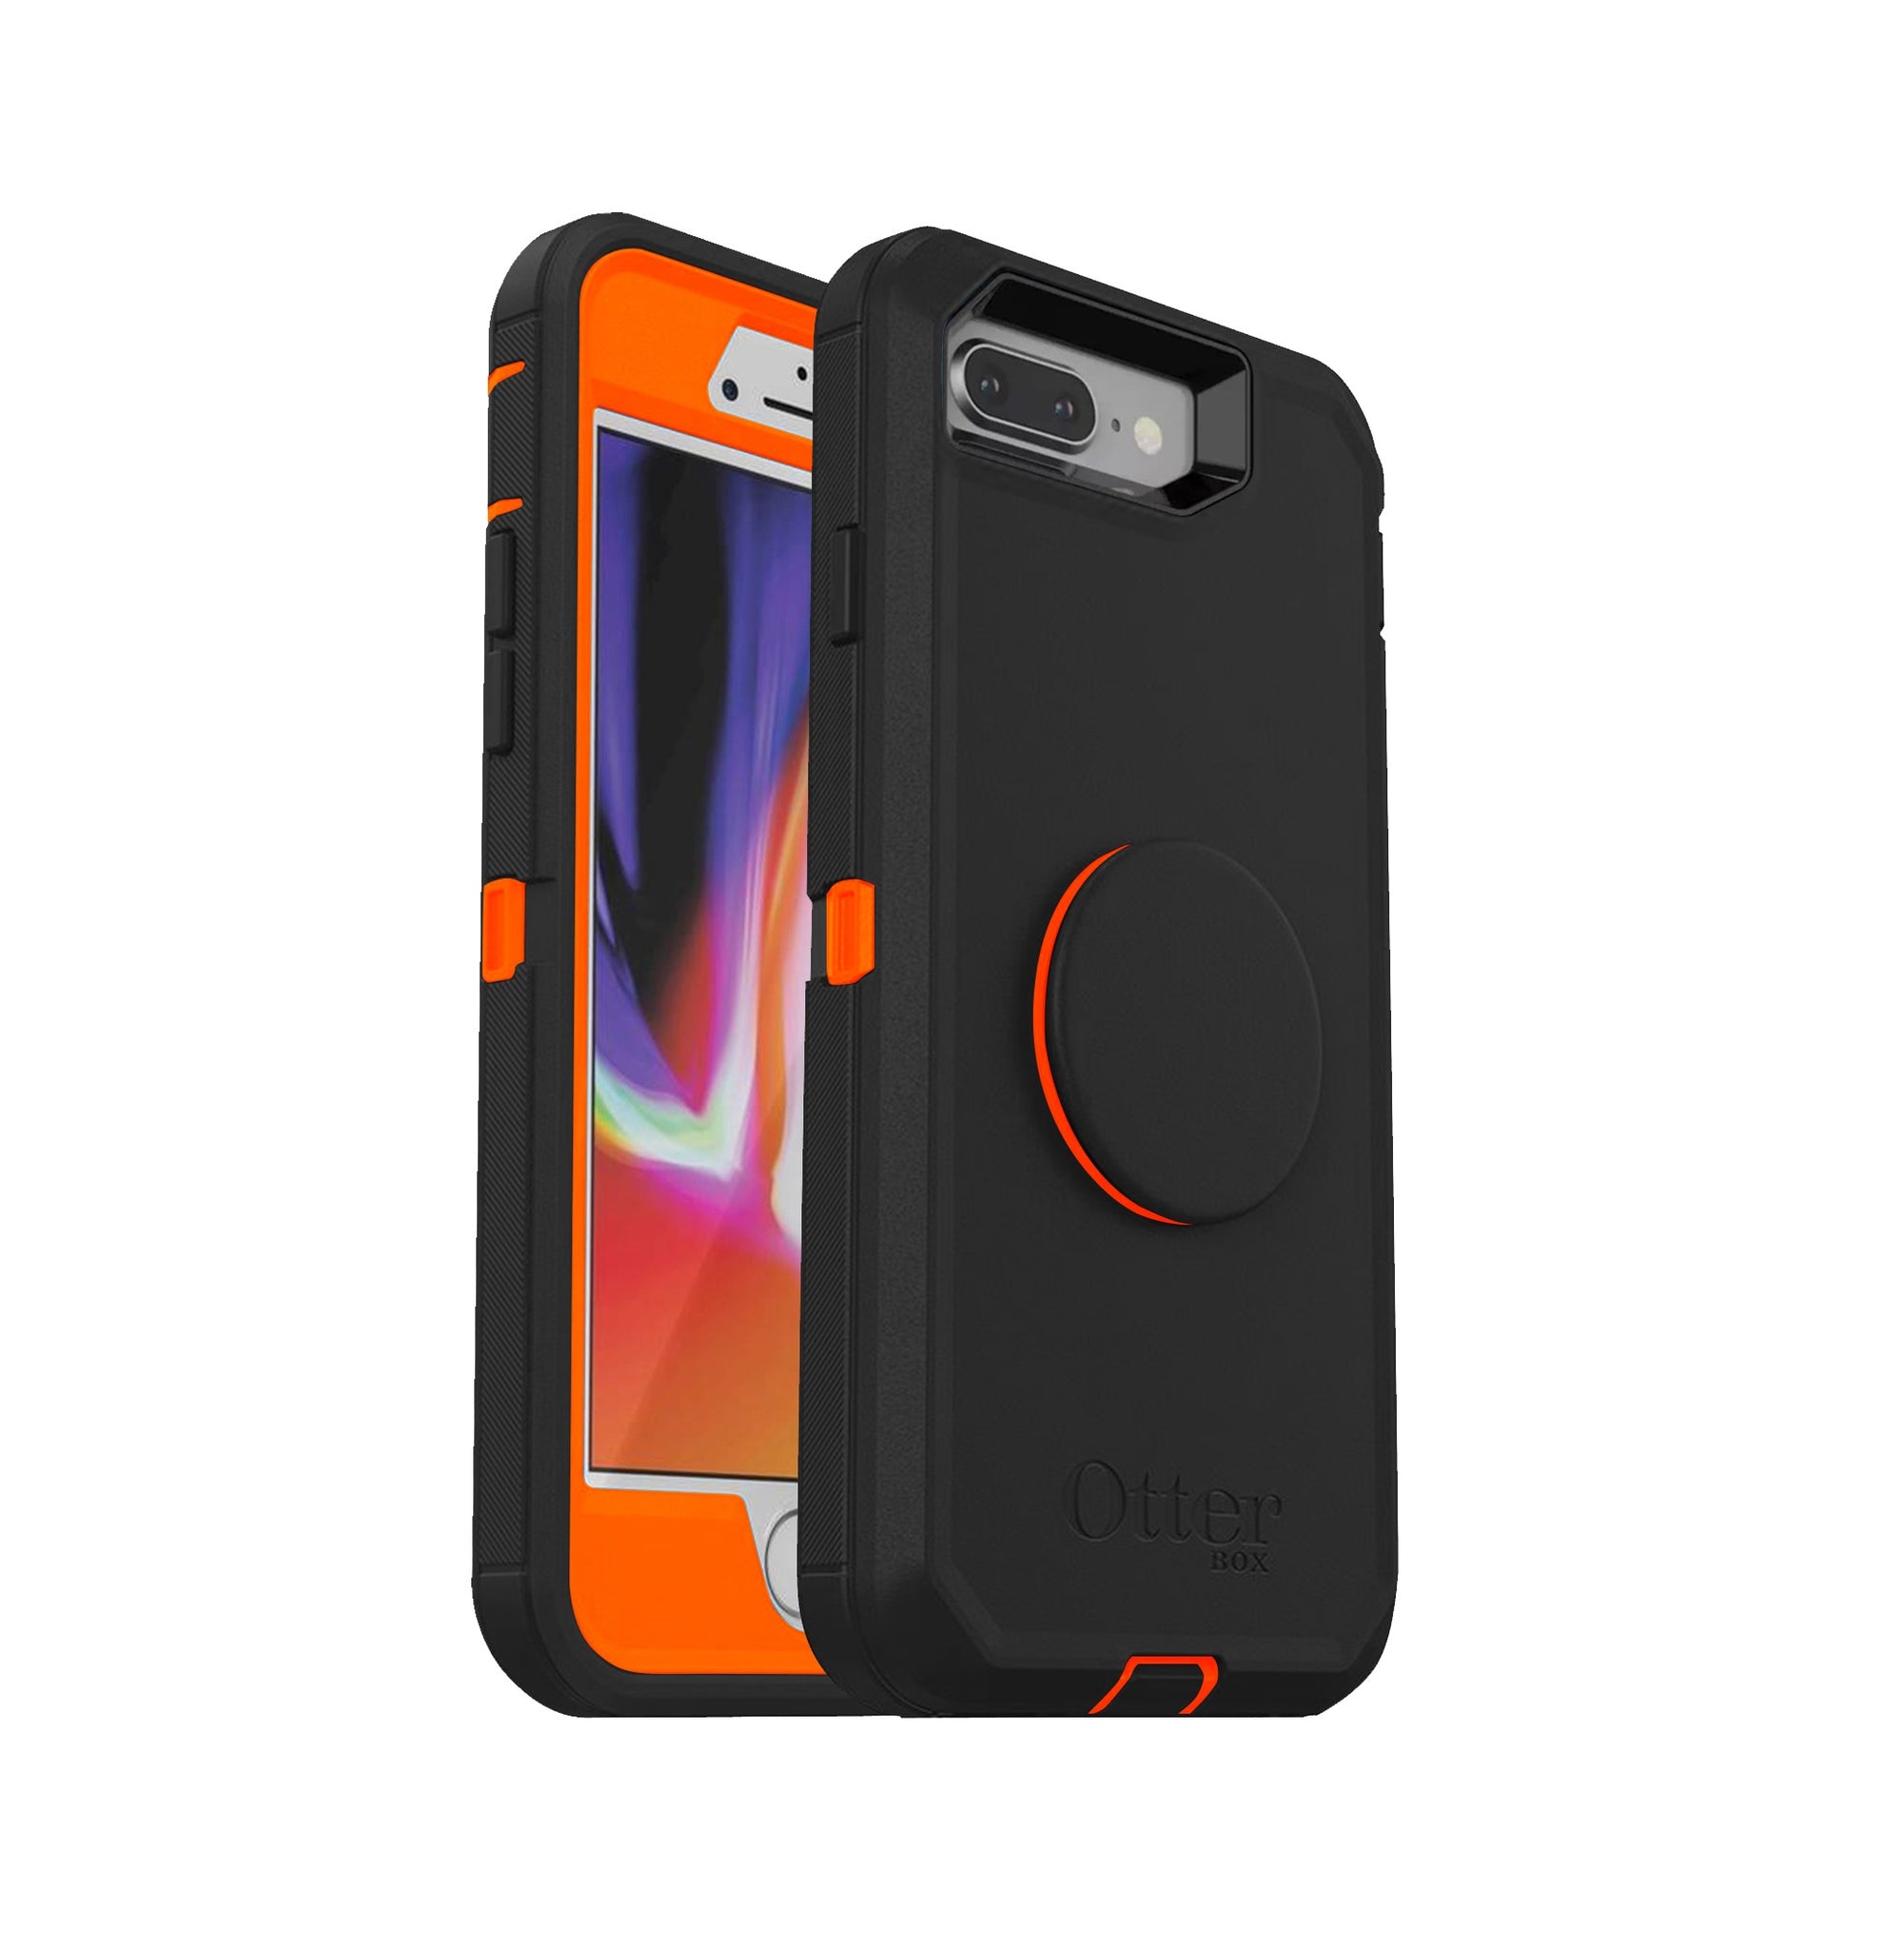 https://caserace.net/products/otterbox-defender-series-pop-case-for-iphone-7-plus-8-plus-black-orange